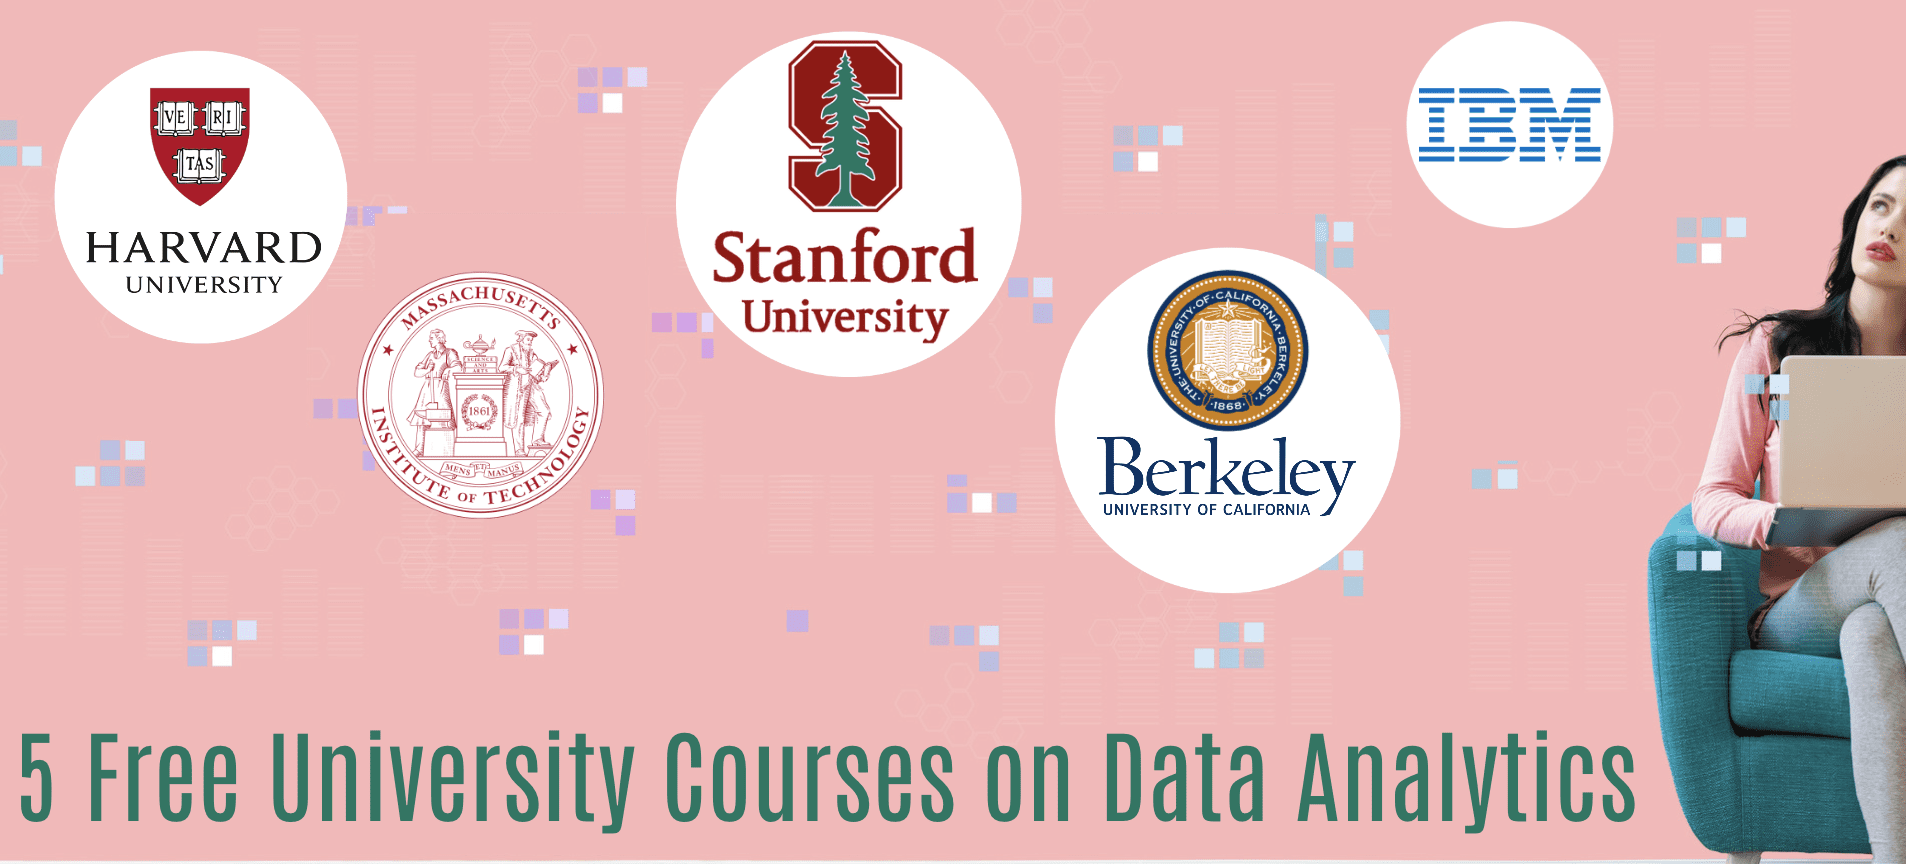 5 Free University Courses on Data Analytics